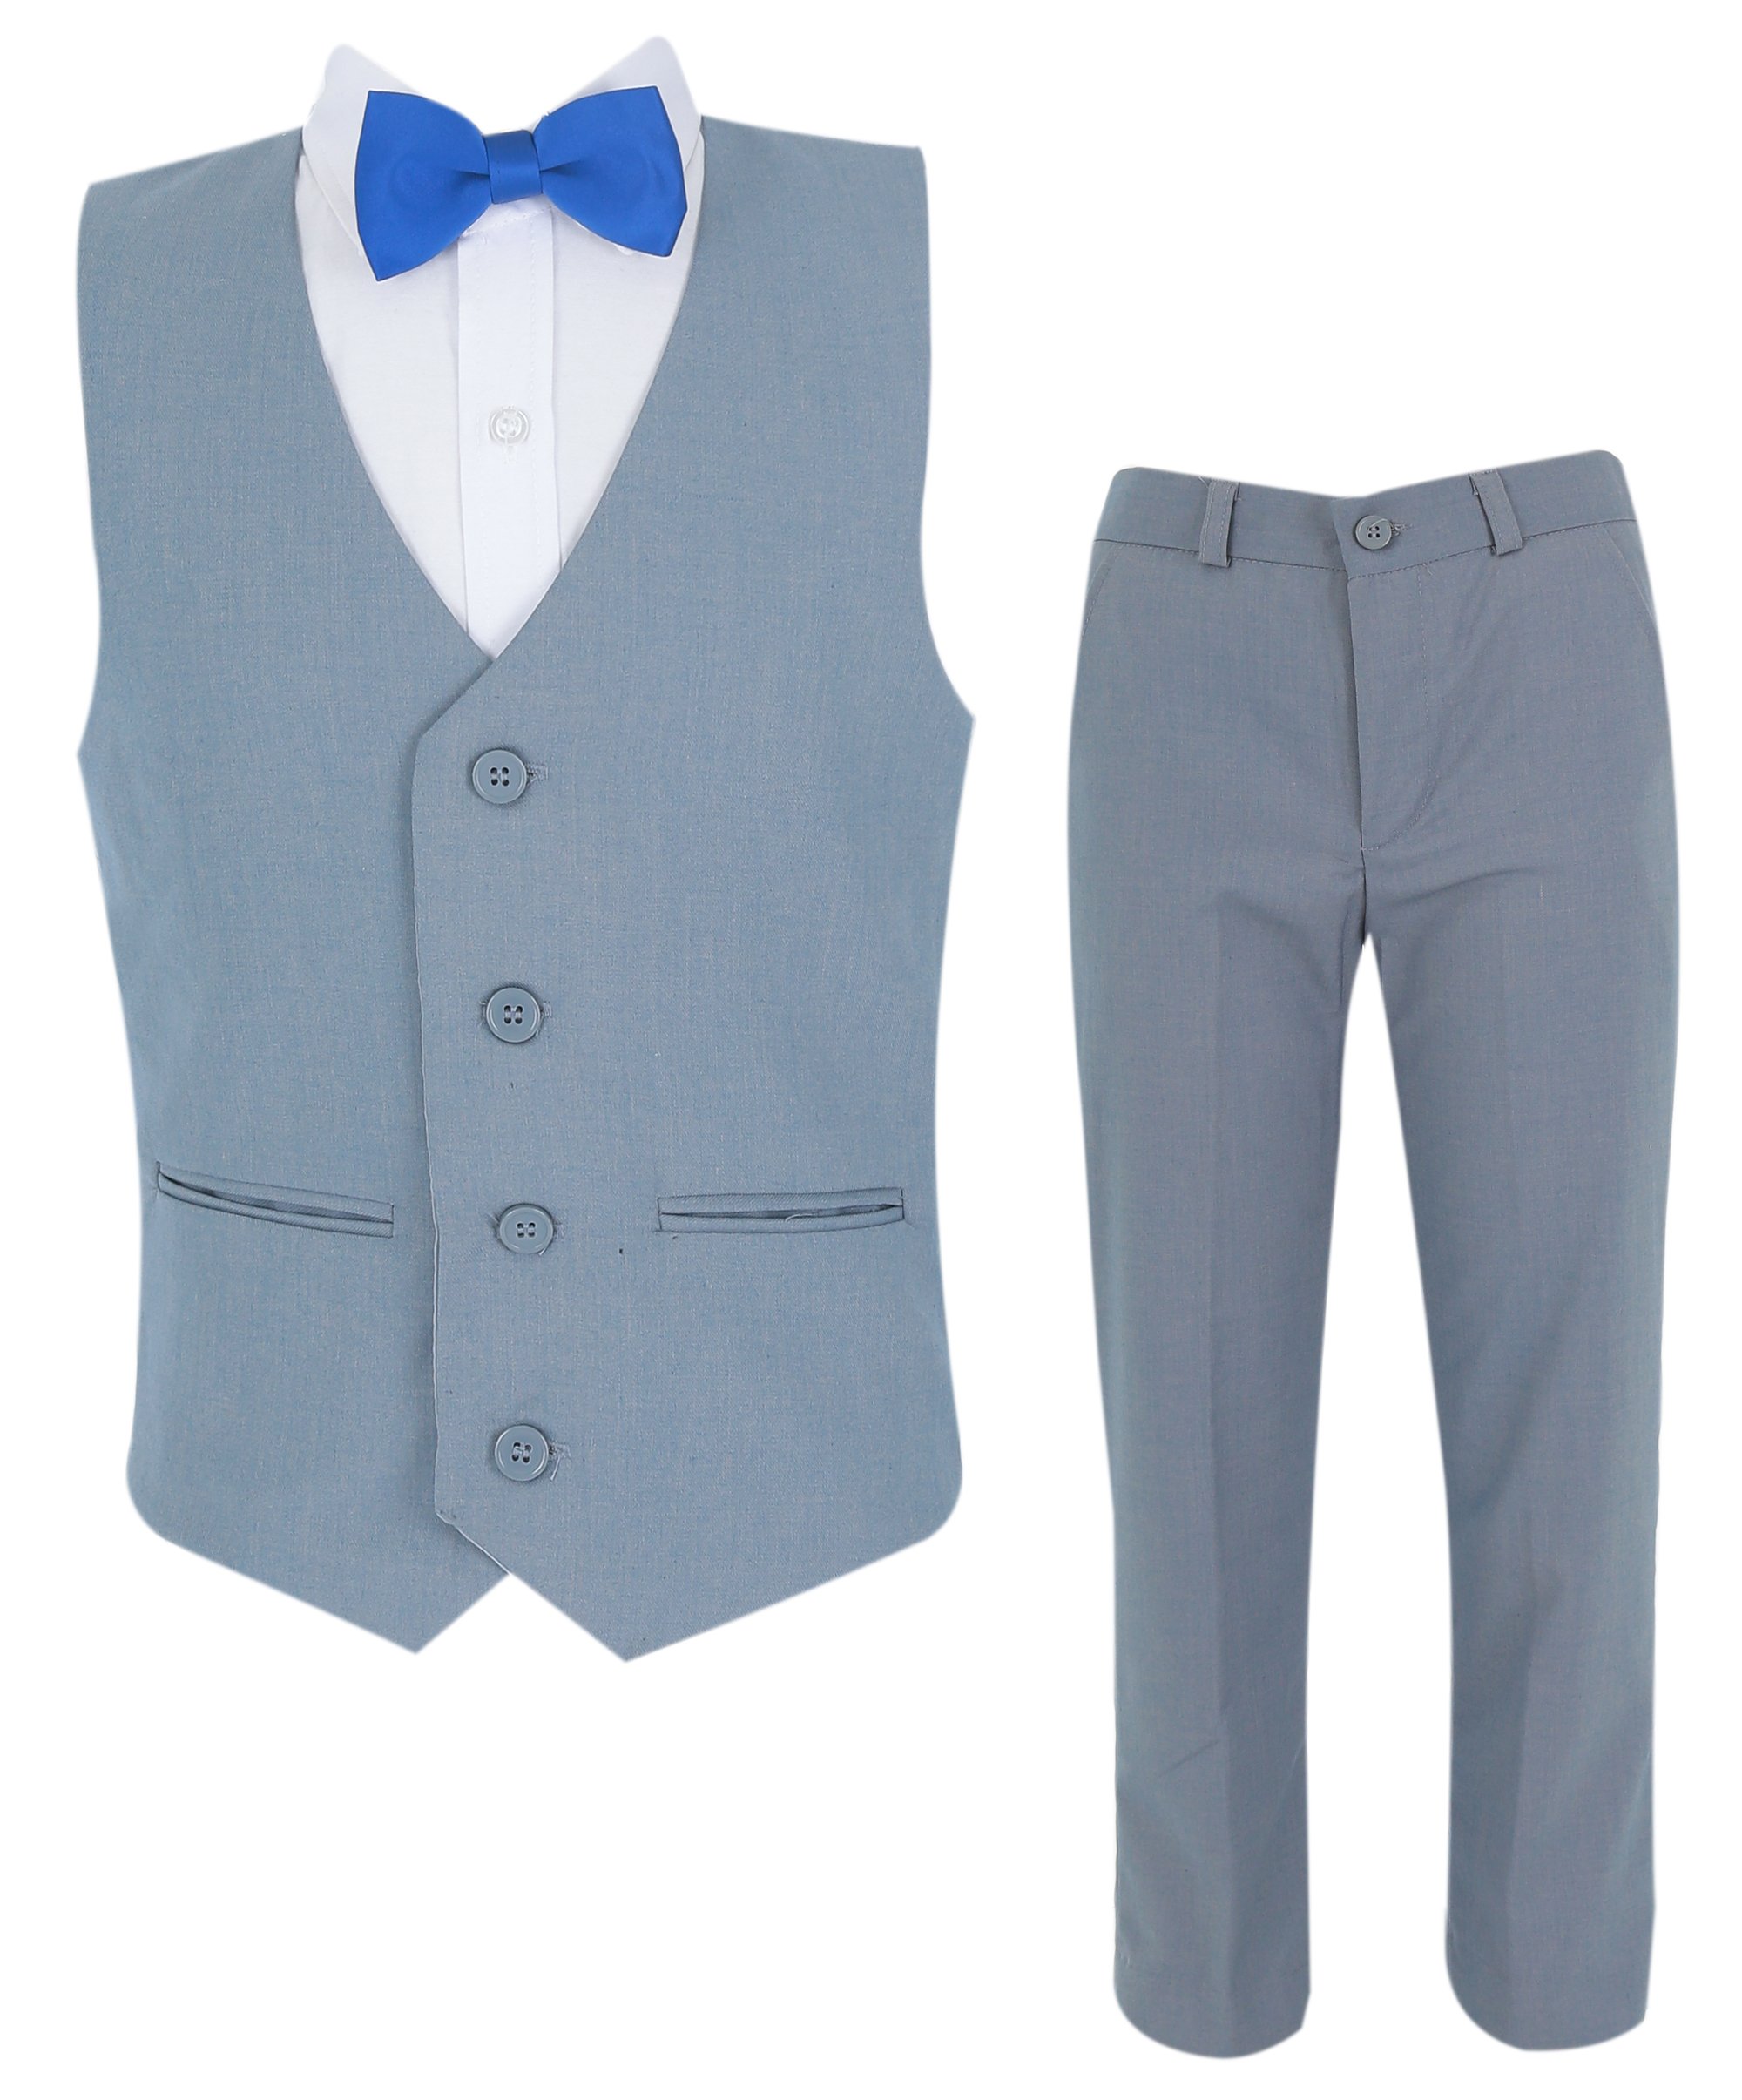 Boys Summer Waistcoat Suit 4 PC Set - Grey